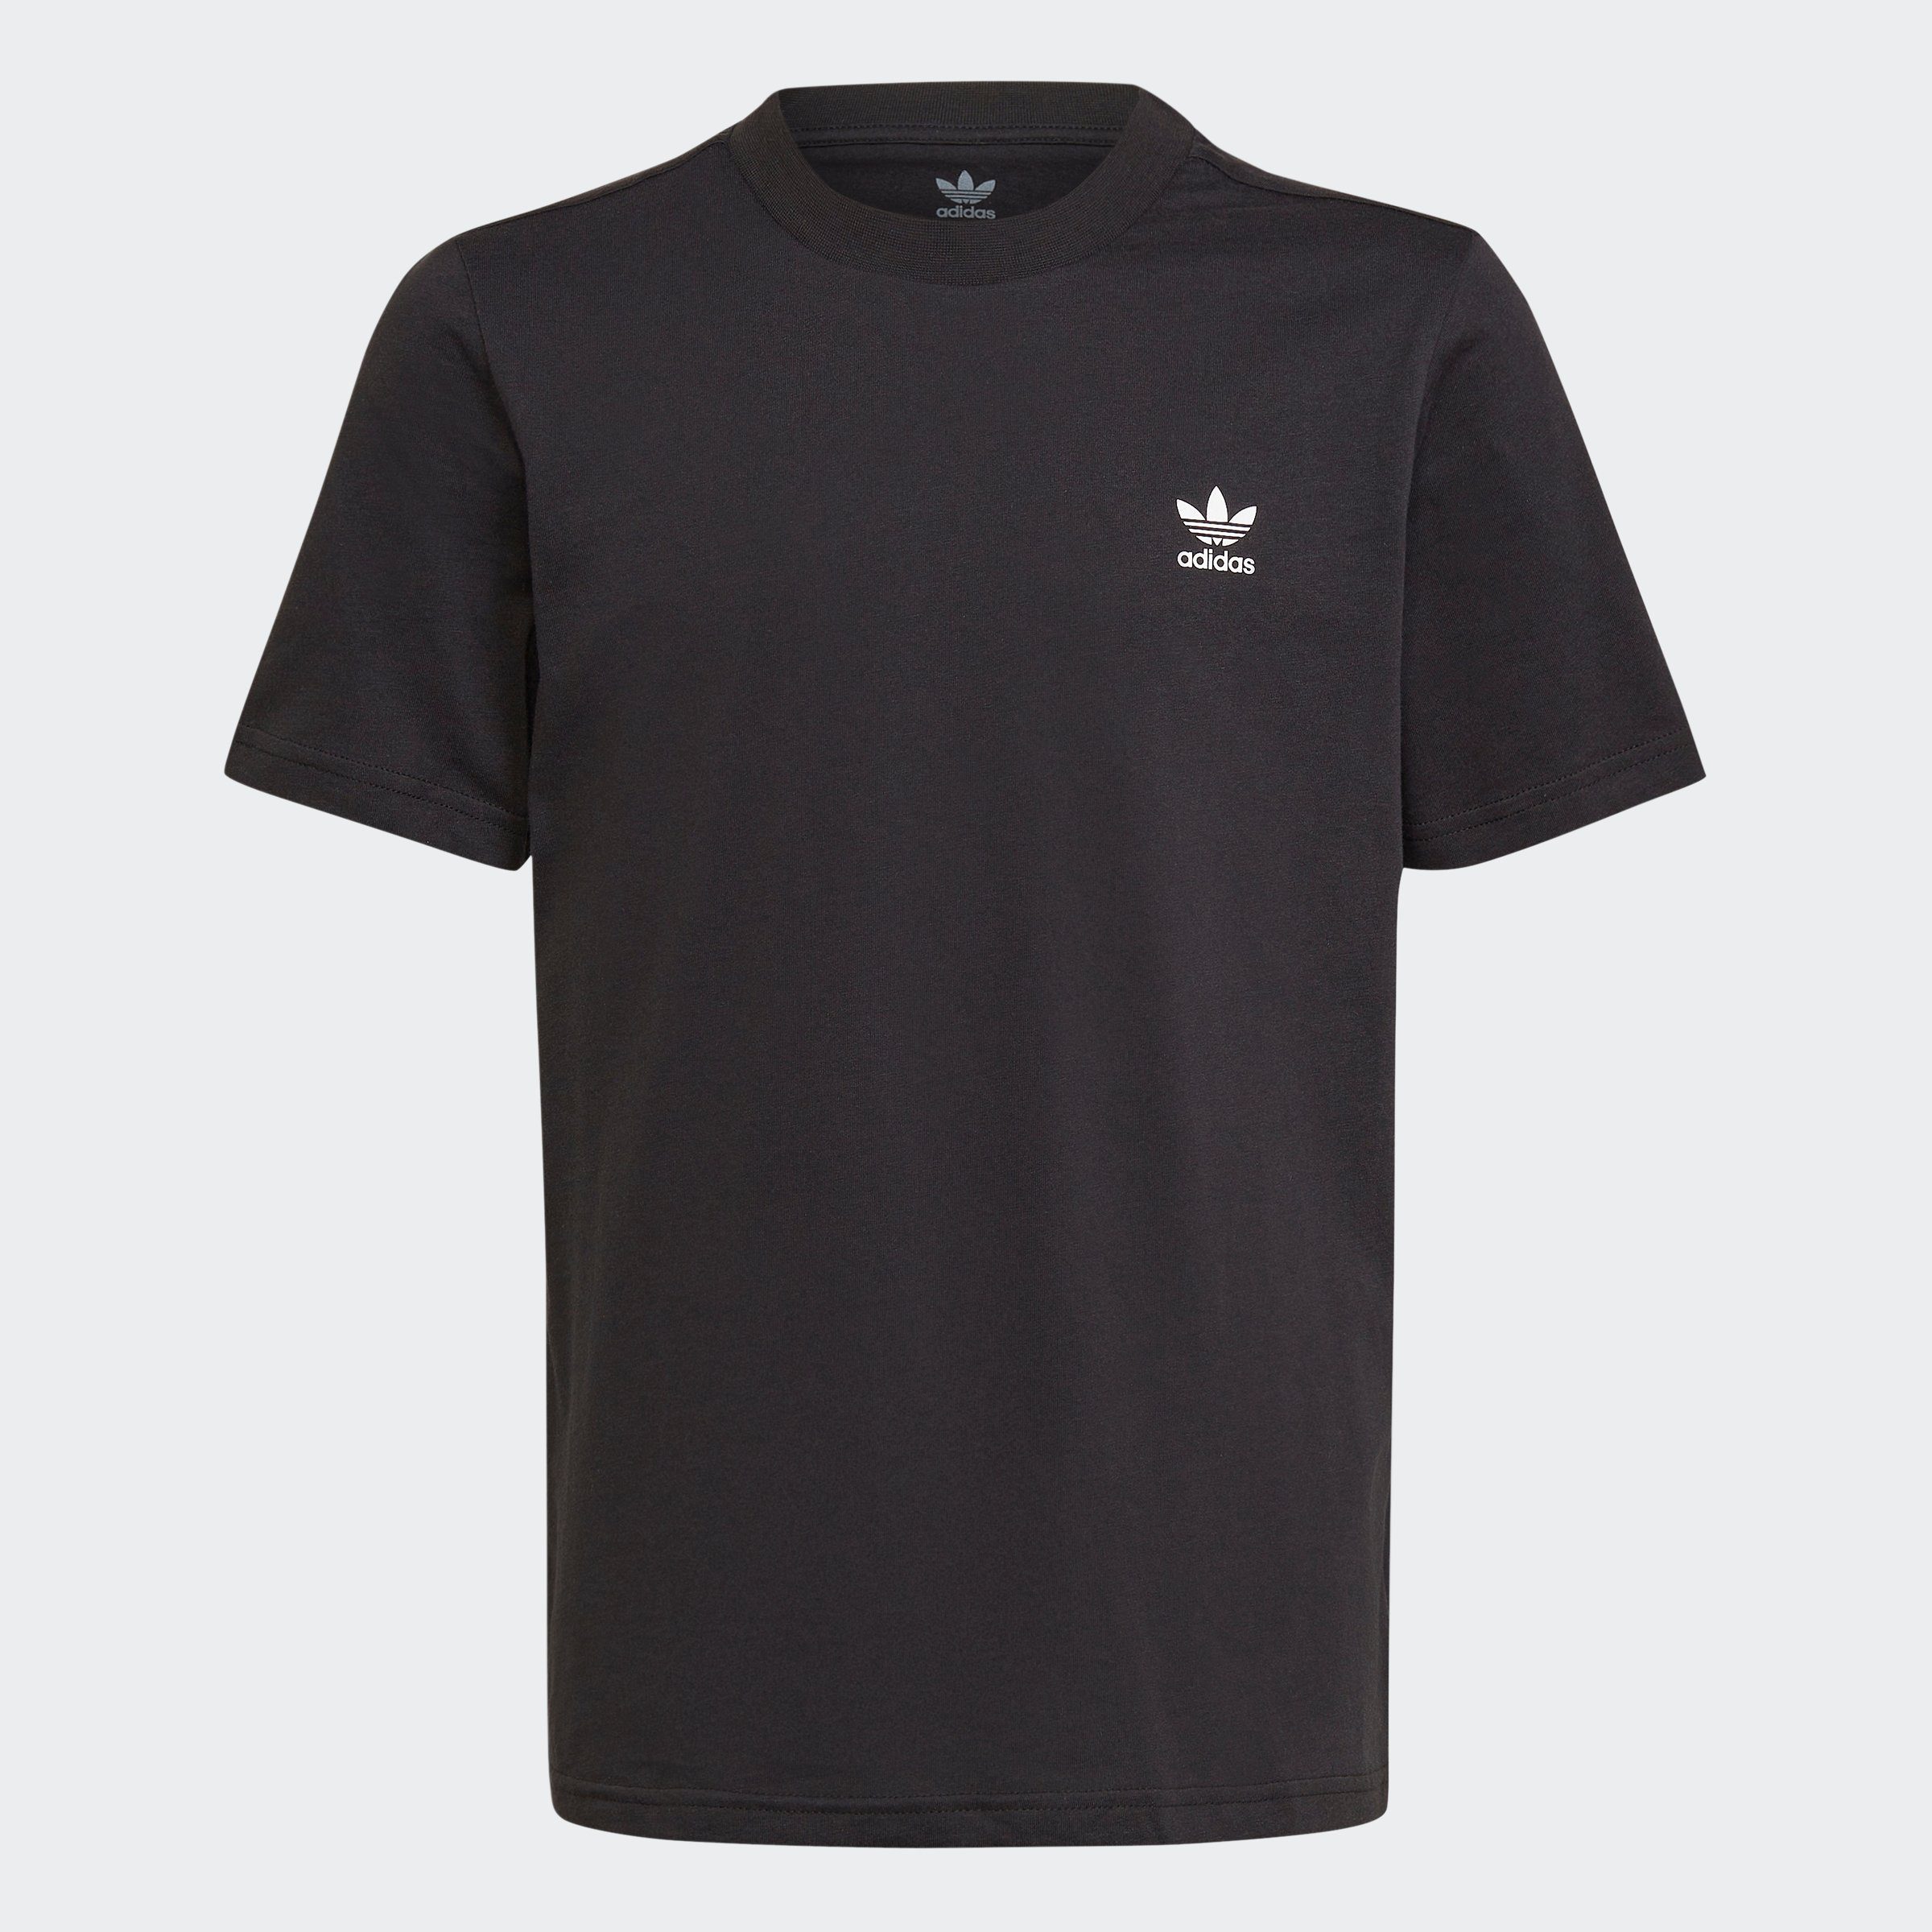 adidas TEE Originals Black T-Shirt